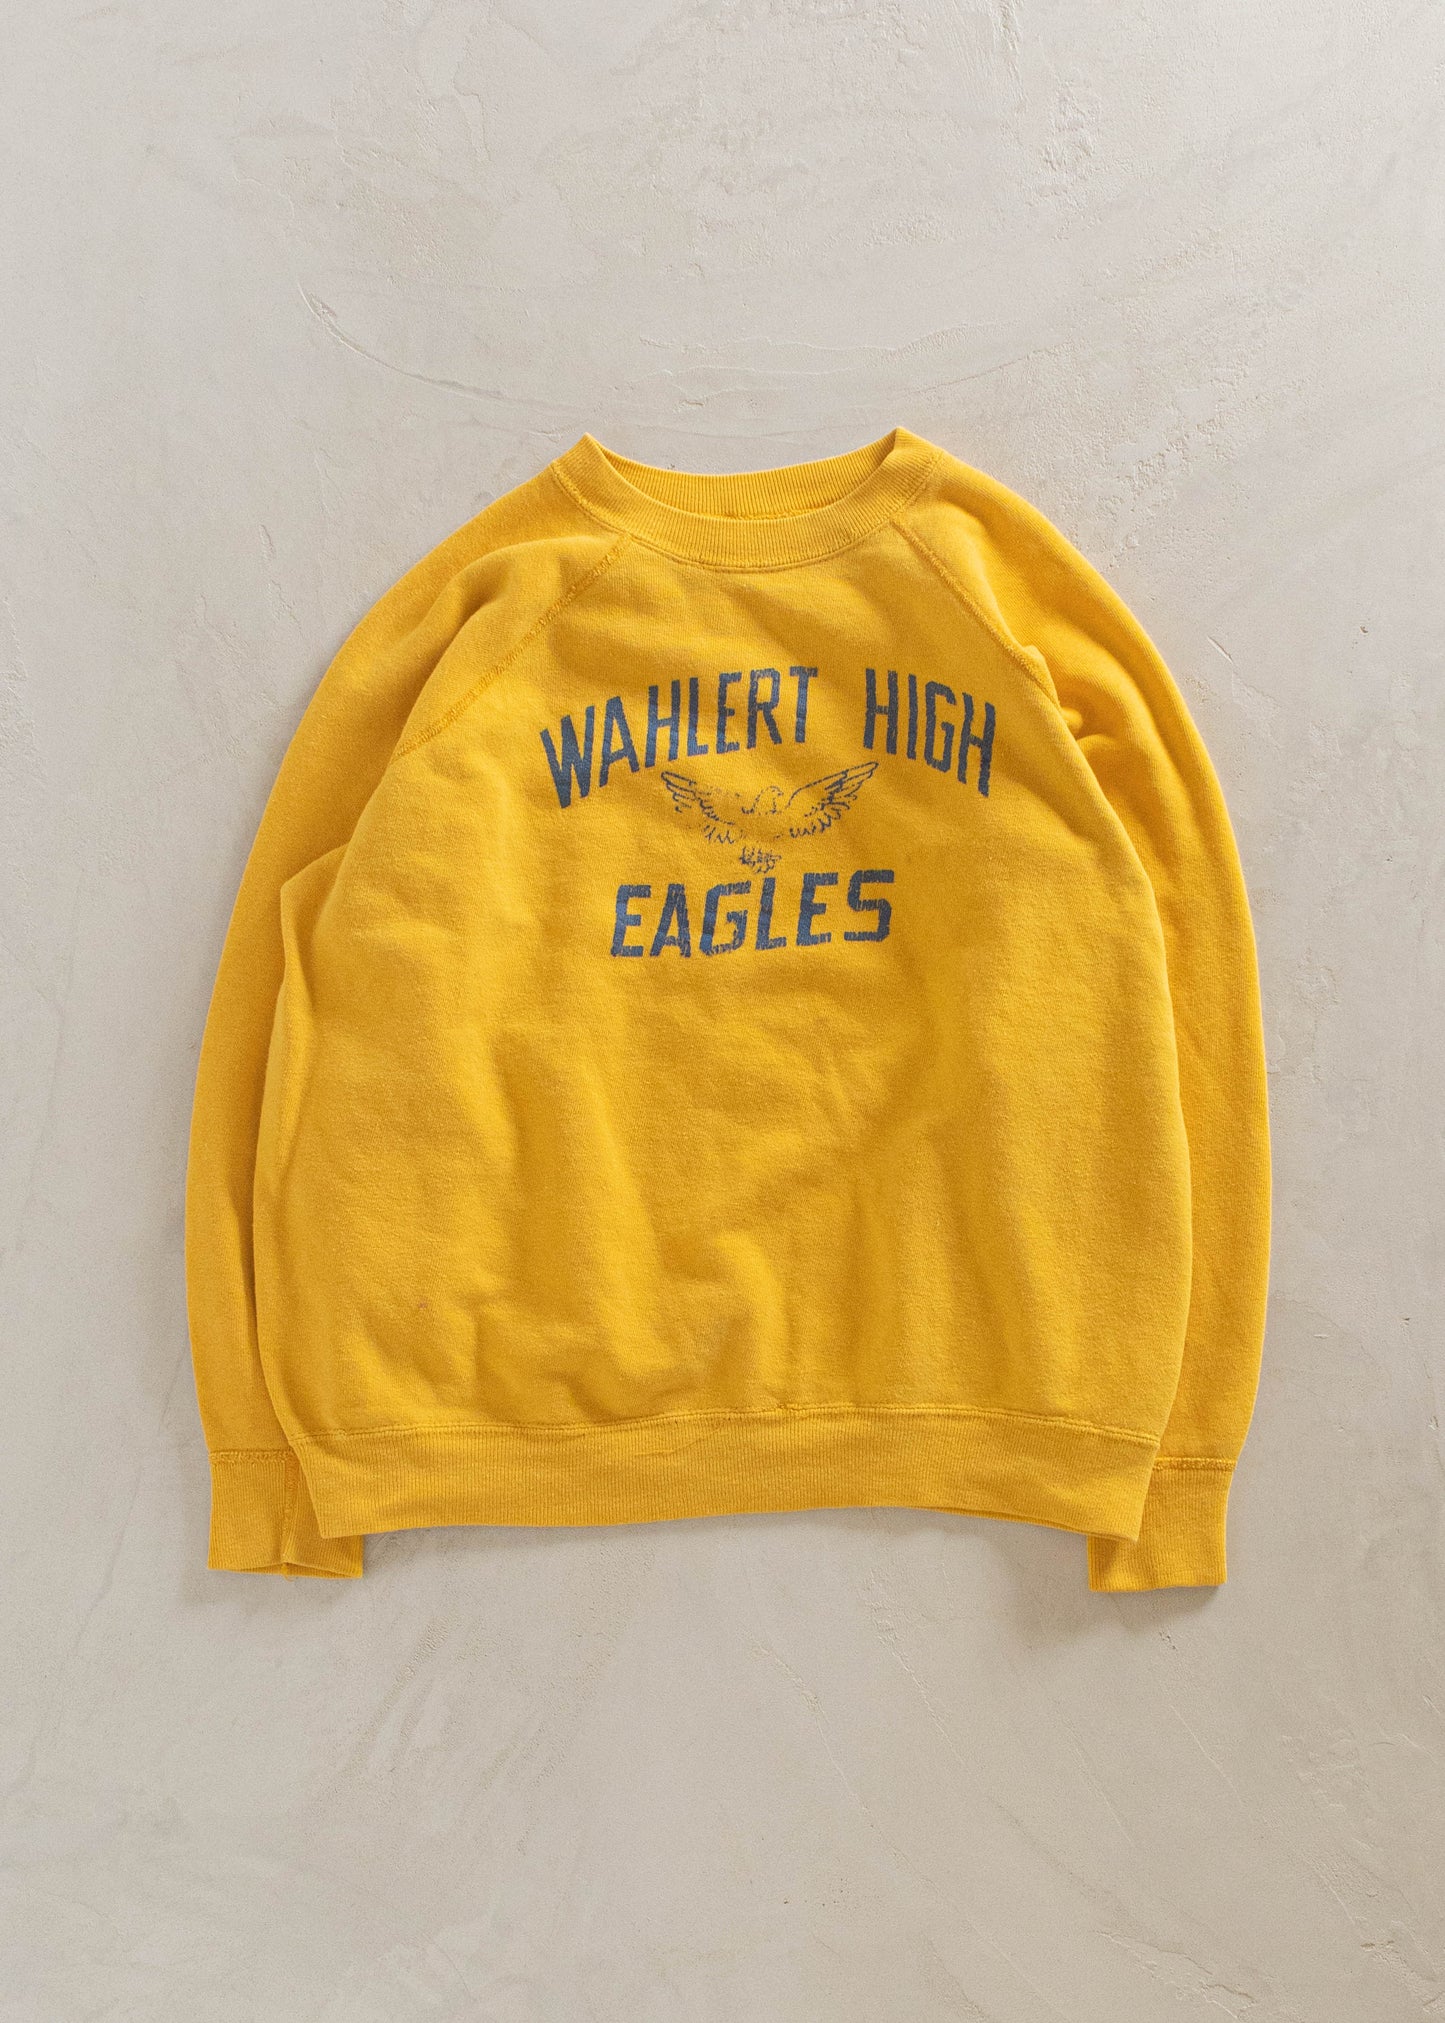 1960s Wahlert High Eagles Raglan Sweatshirt Size M/L